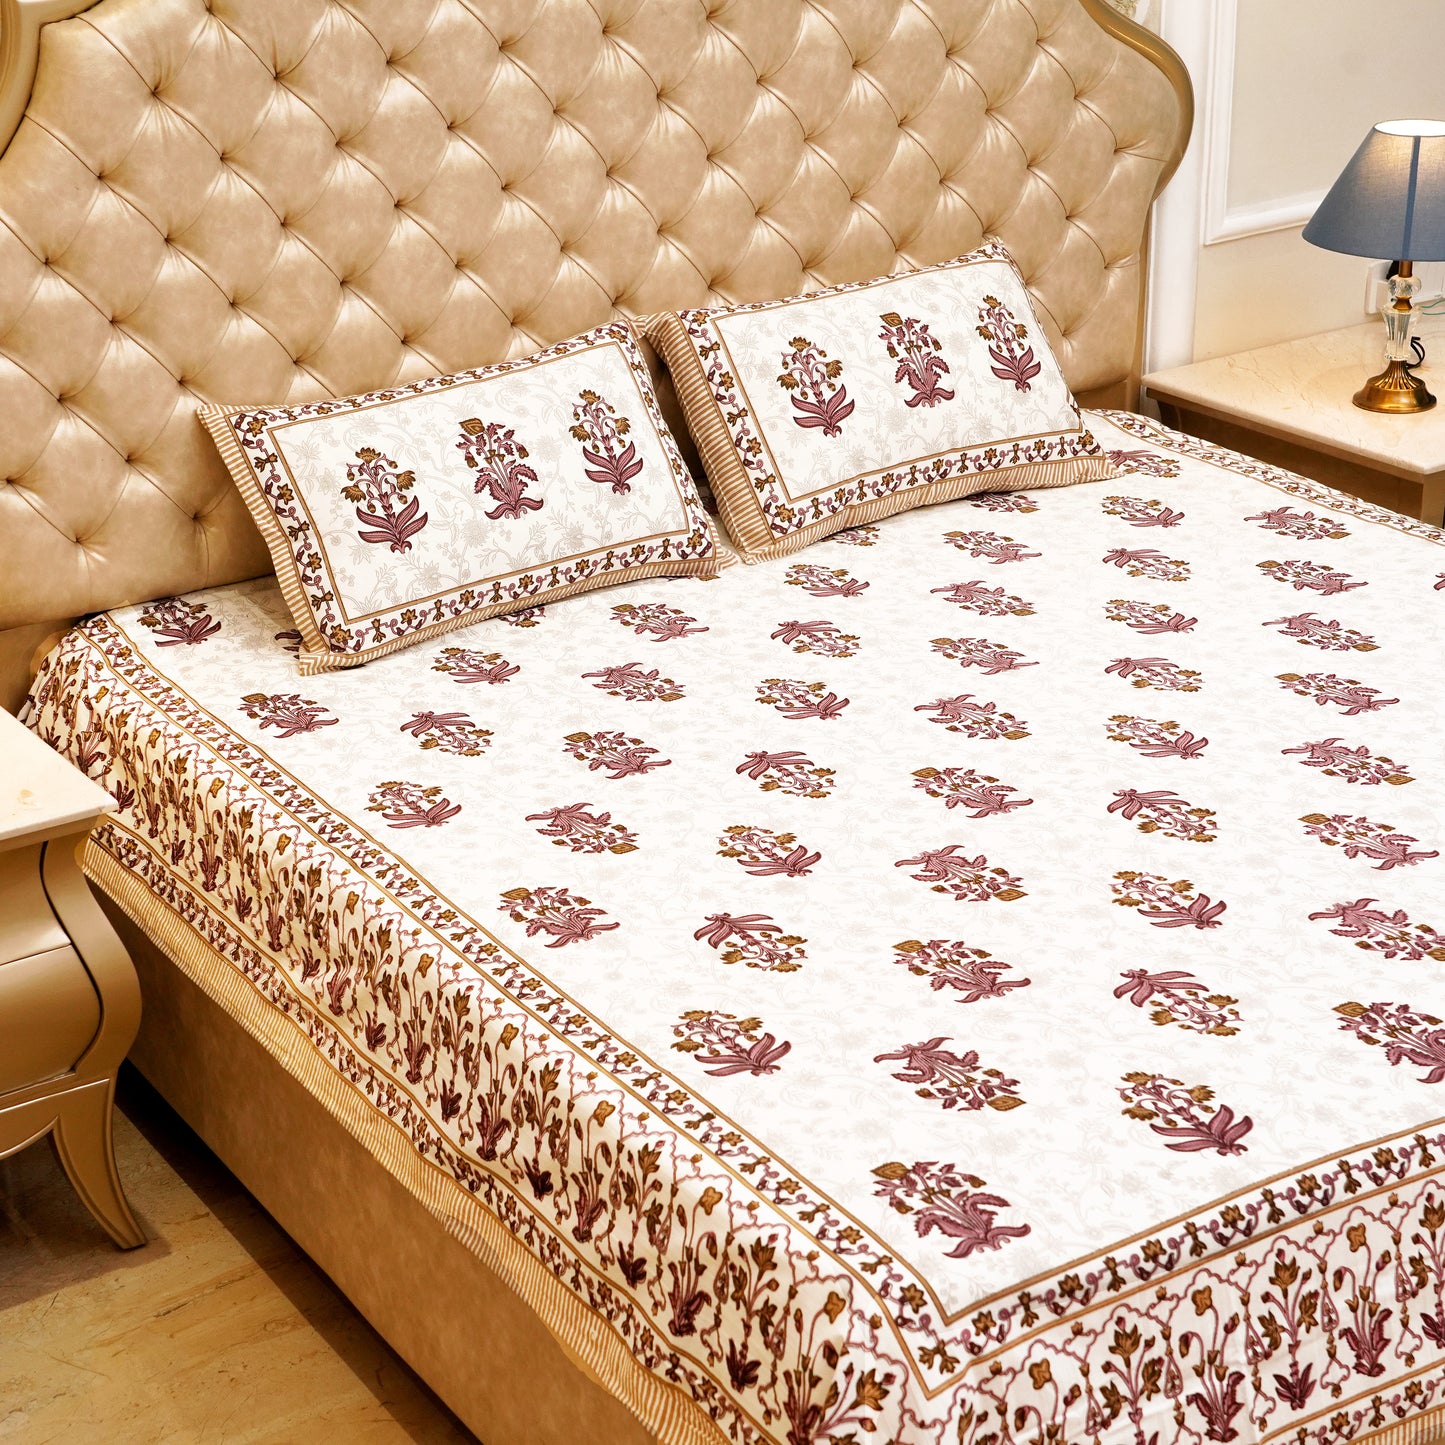 Pure Cotton Block Print Jaipuri Bedsheet - King Size 95*108 inches - Brown Daisies